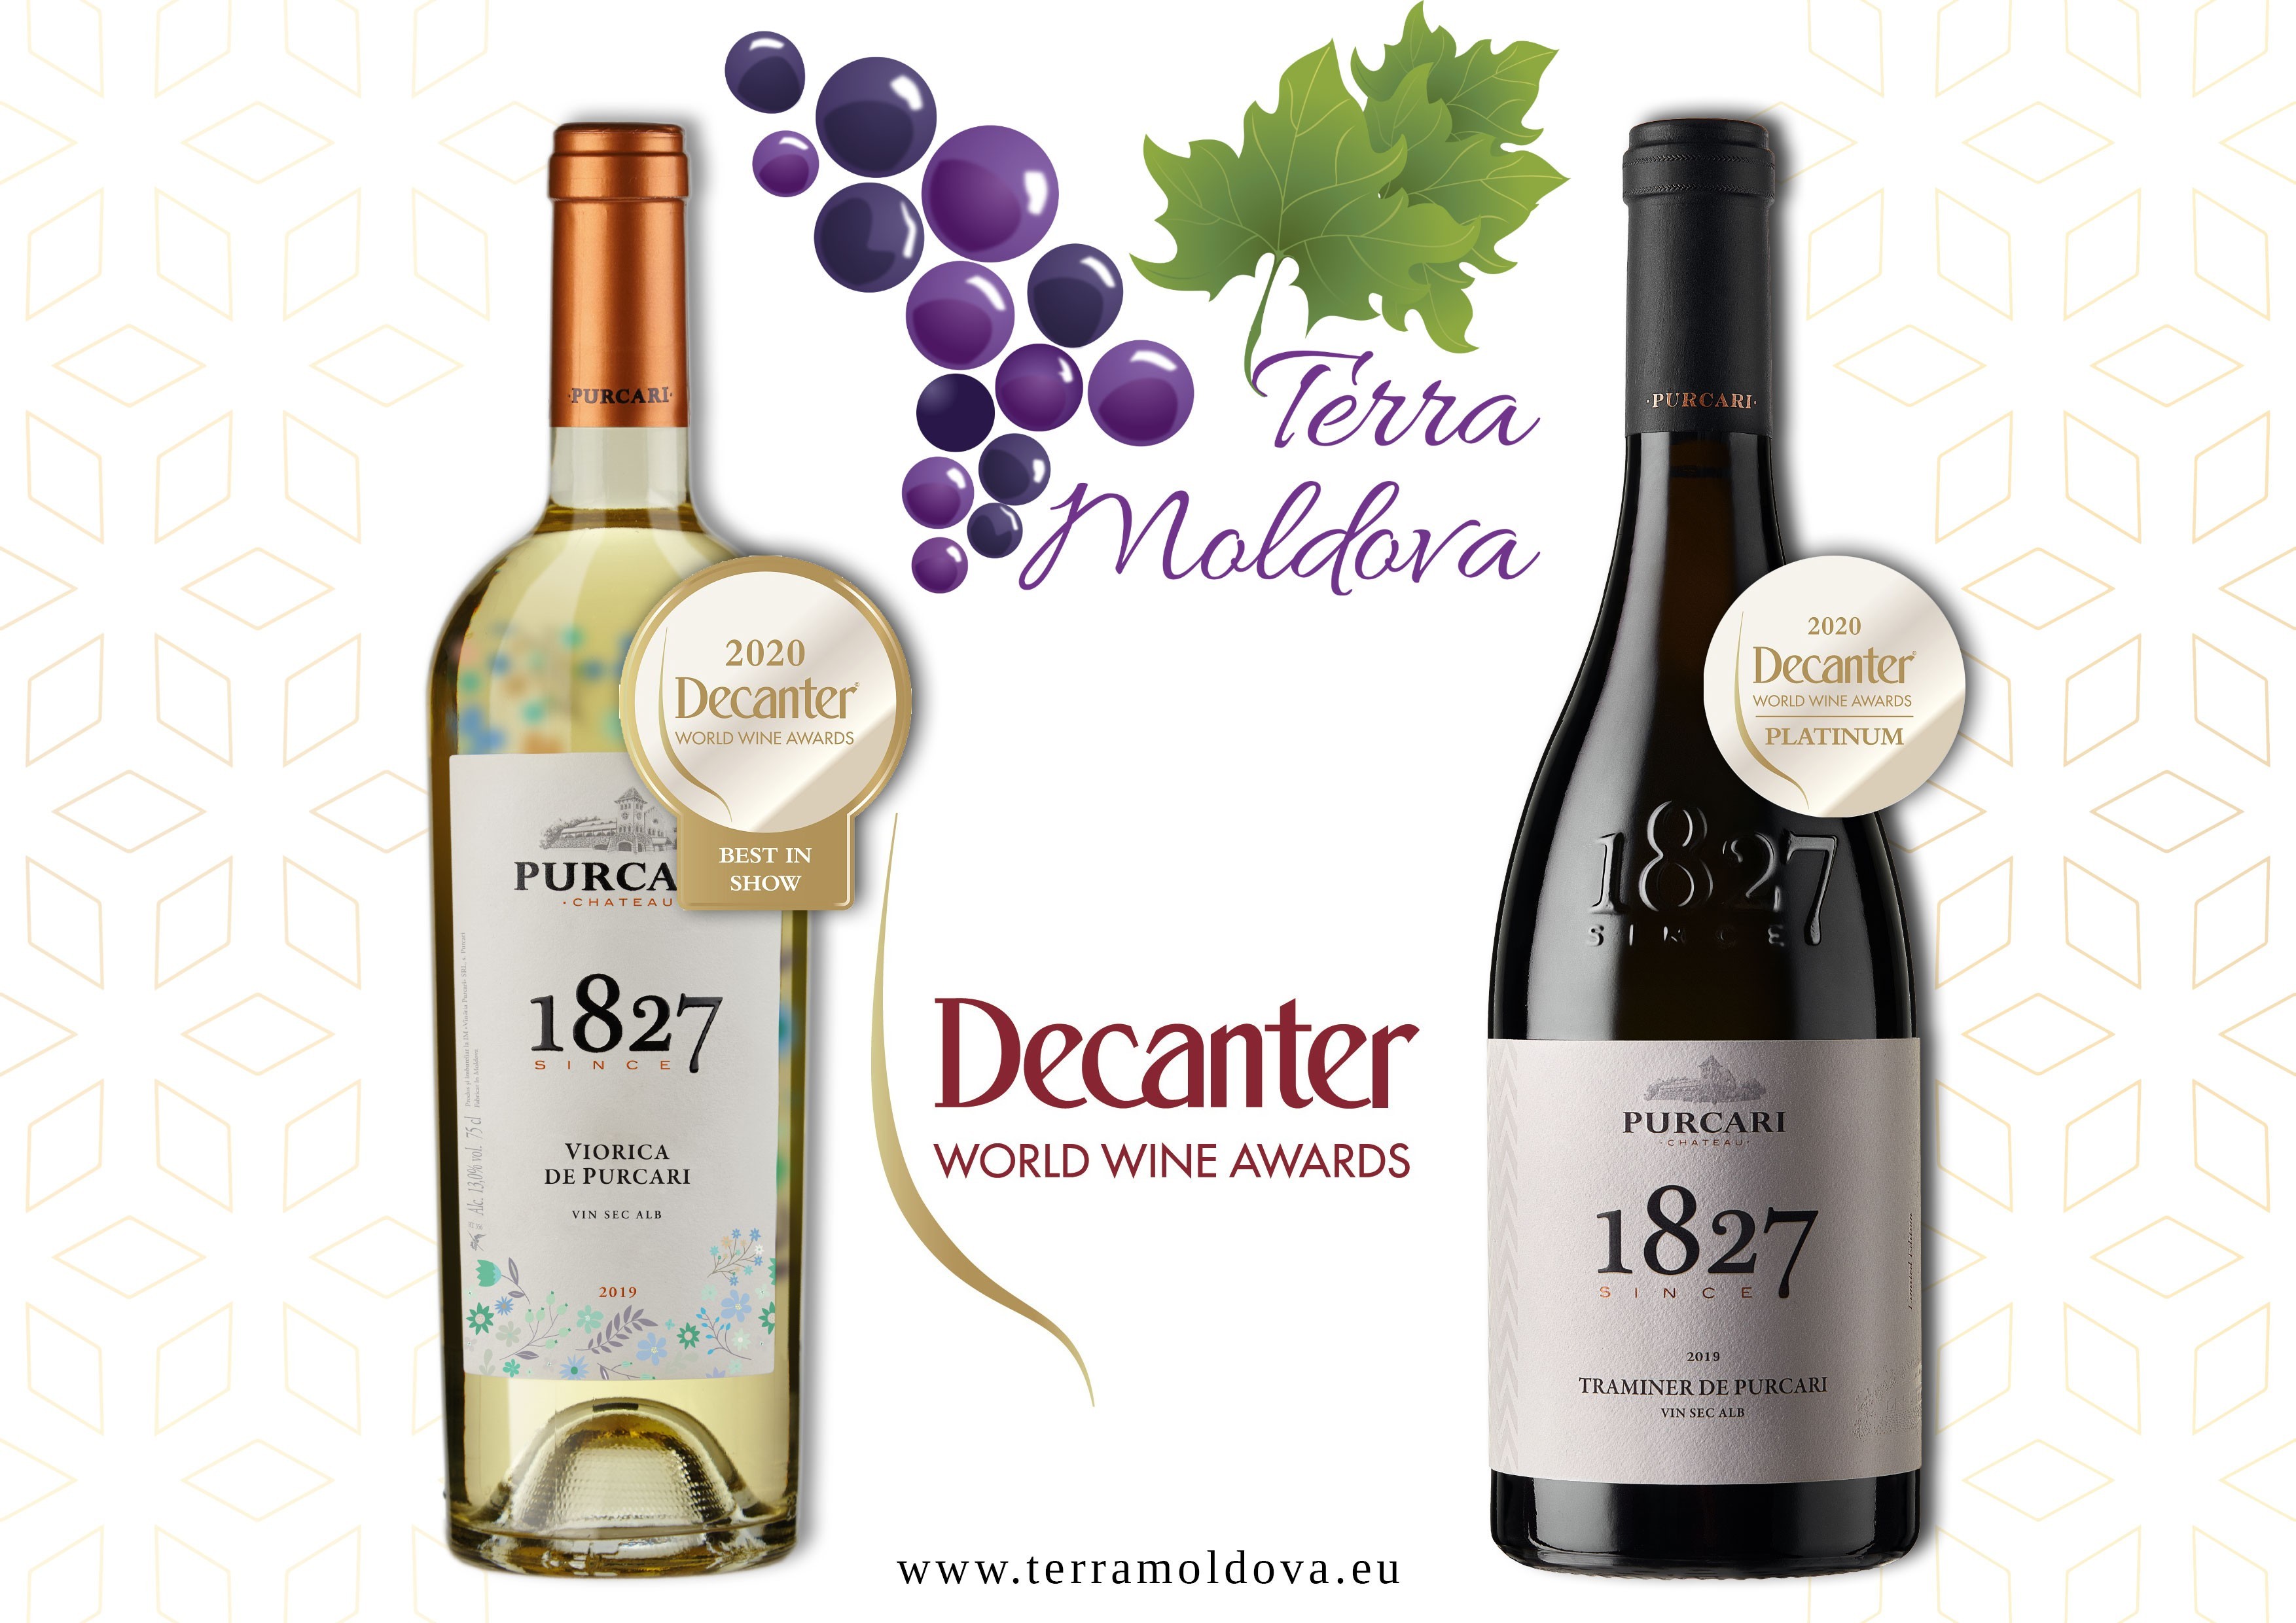 Decanter World Wine Award Contest 2020 awards